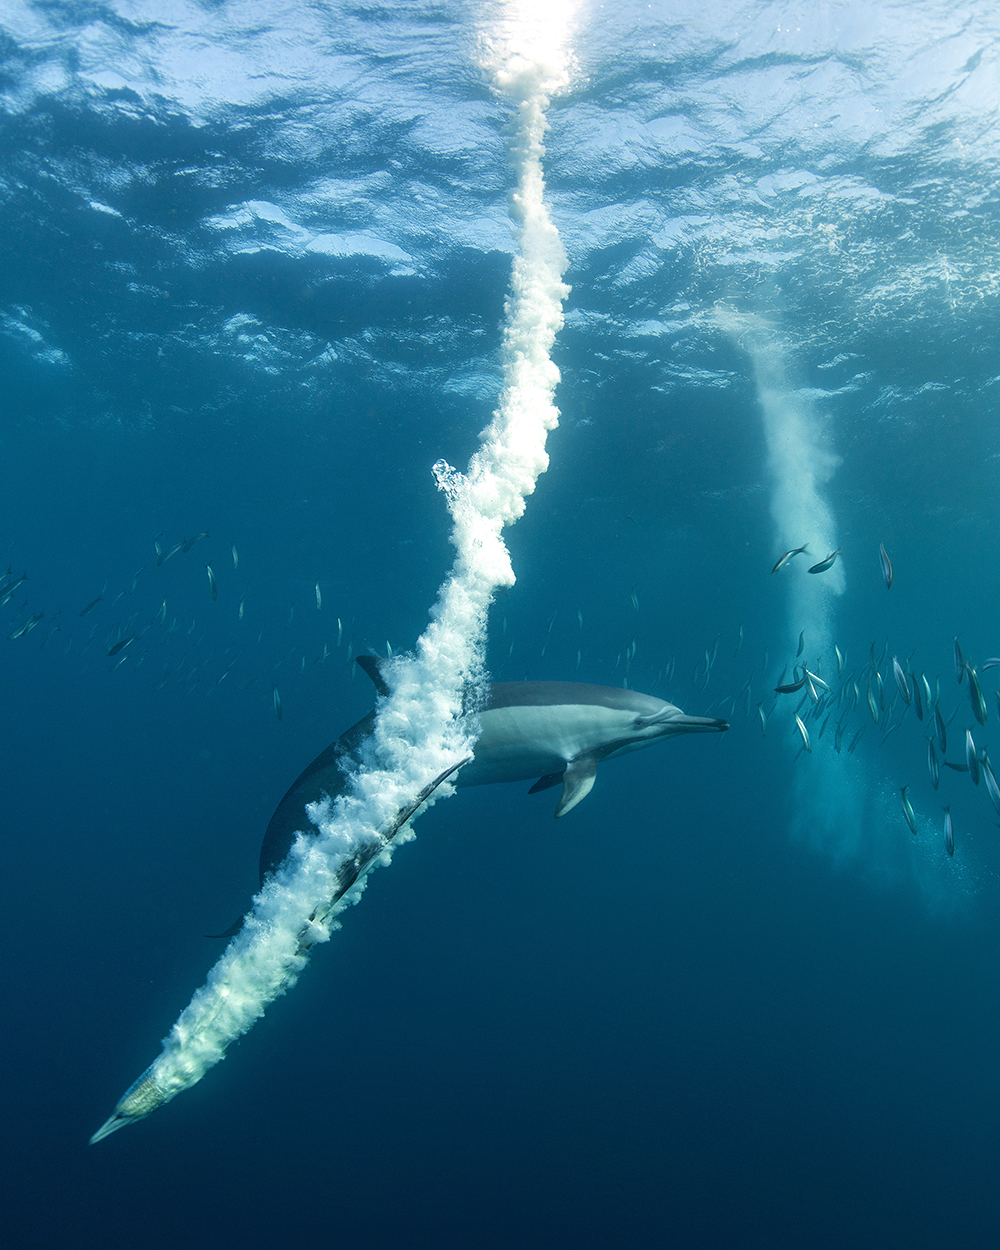 Dolphins, sardine run liveabaord